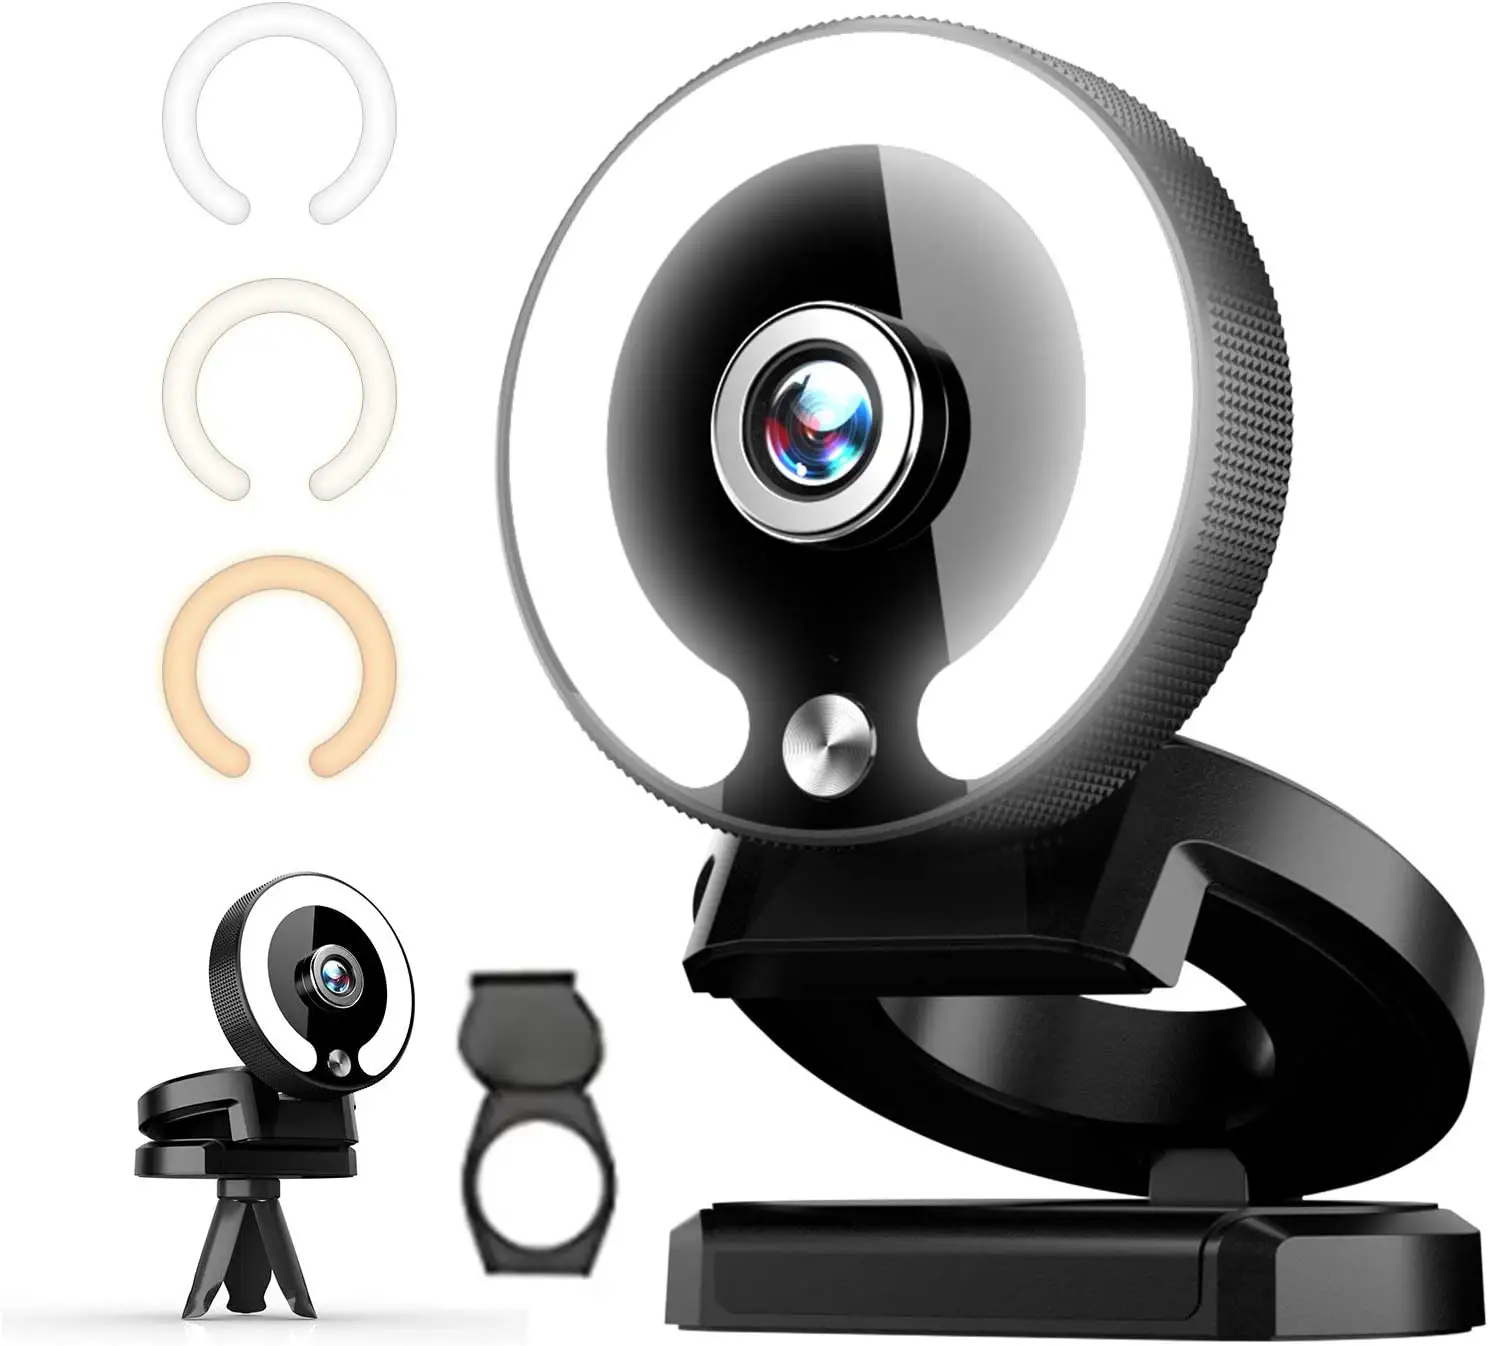 1080p 2k Streaming Auto Focusing Fhd Autofocus Usb Streaming Webcam Hd PC Web Camera